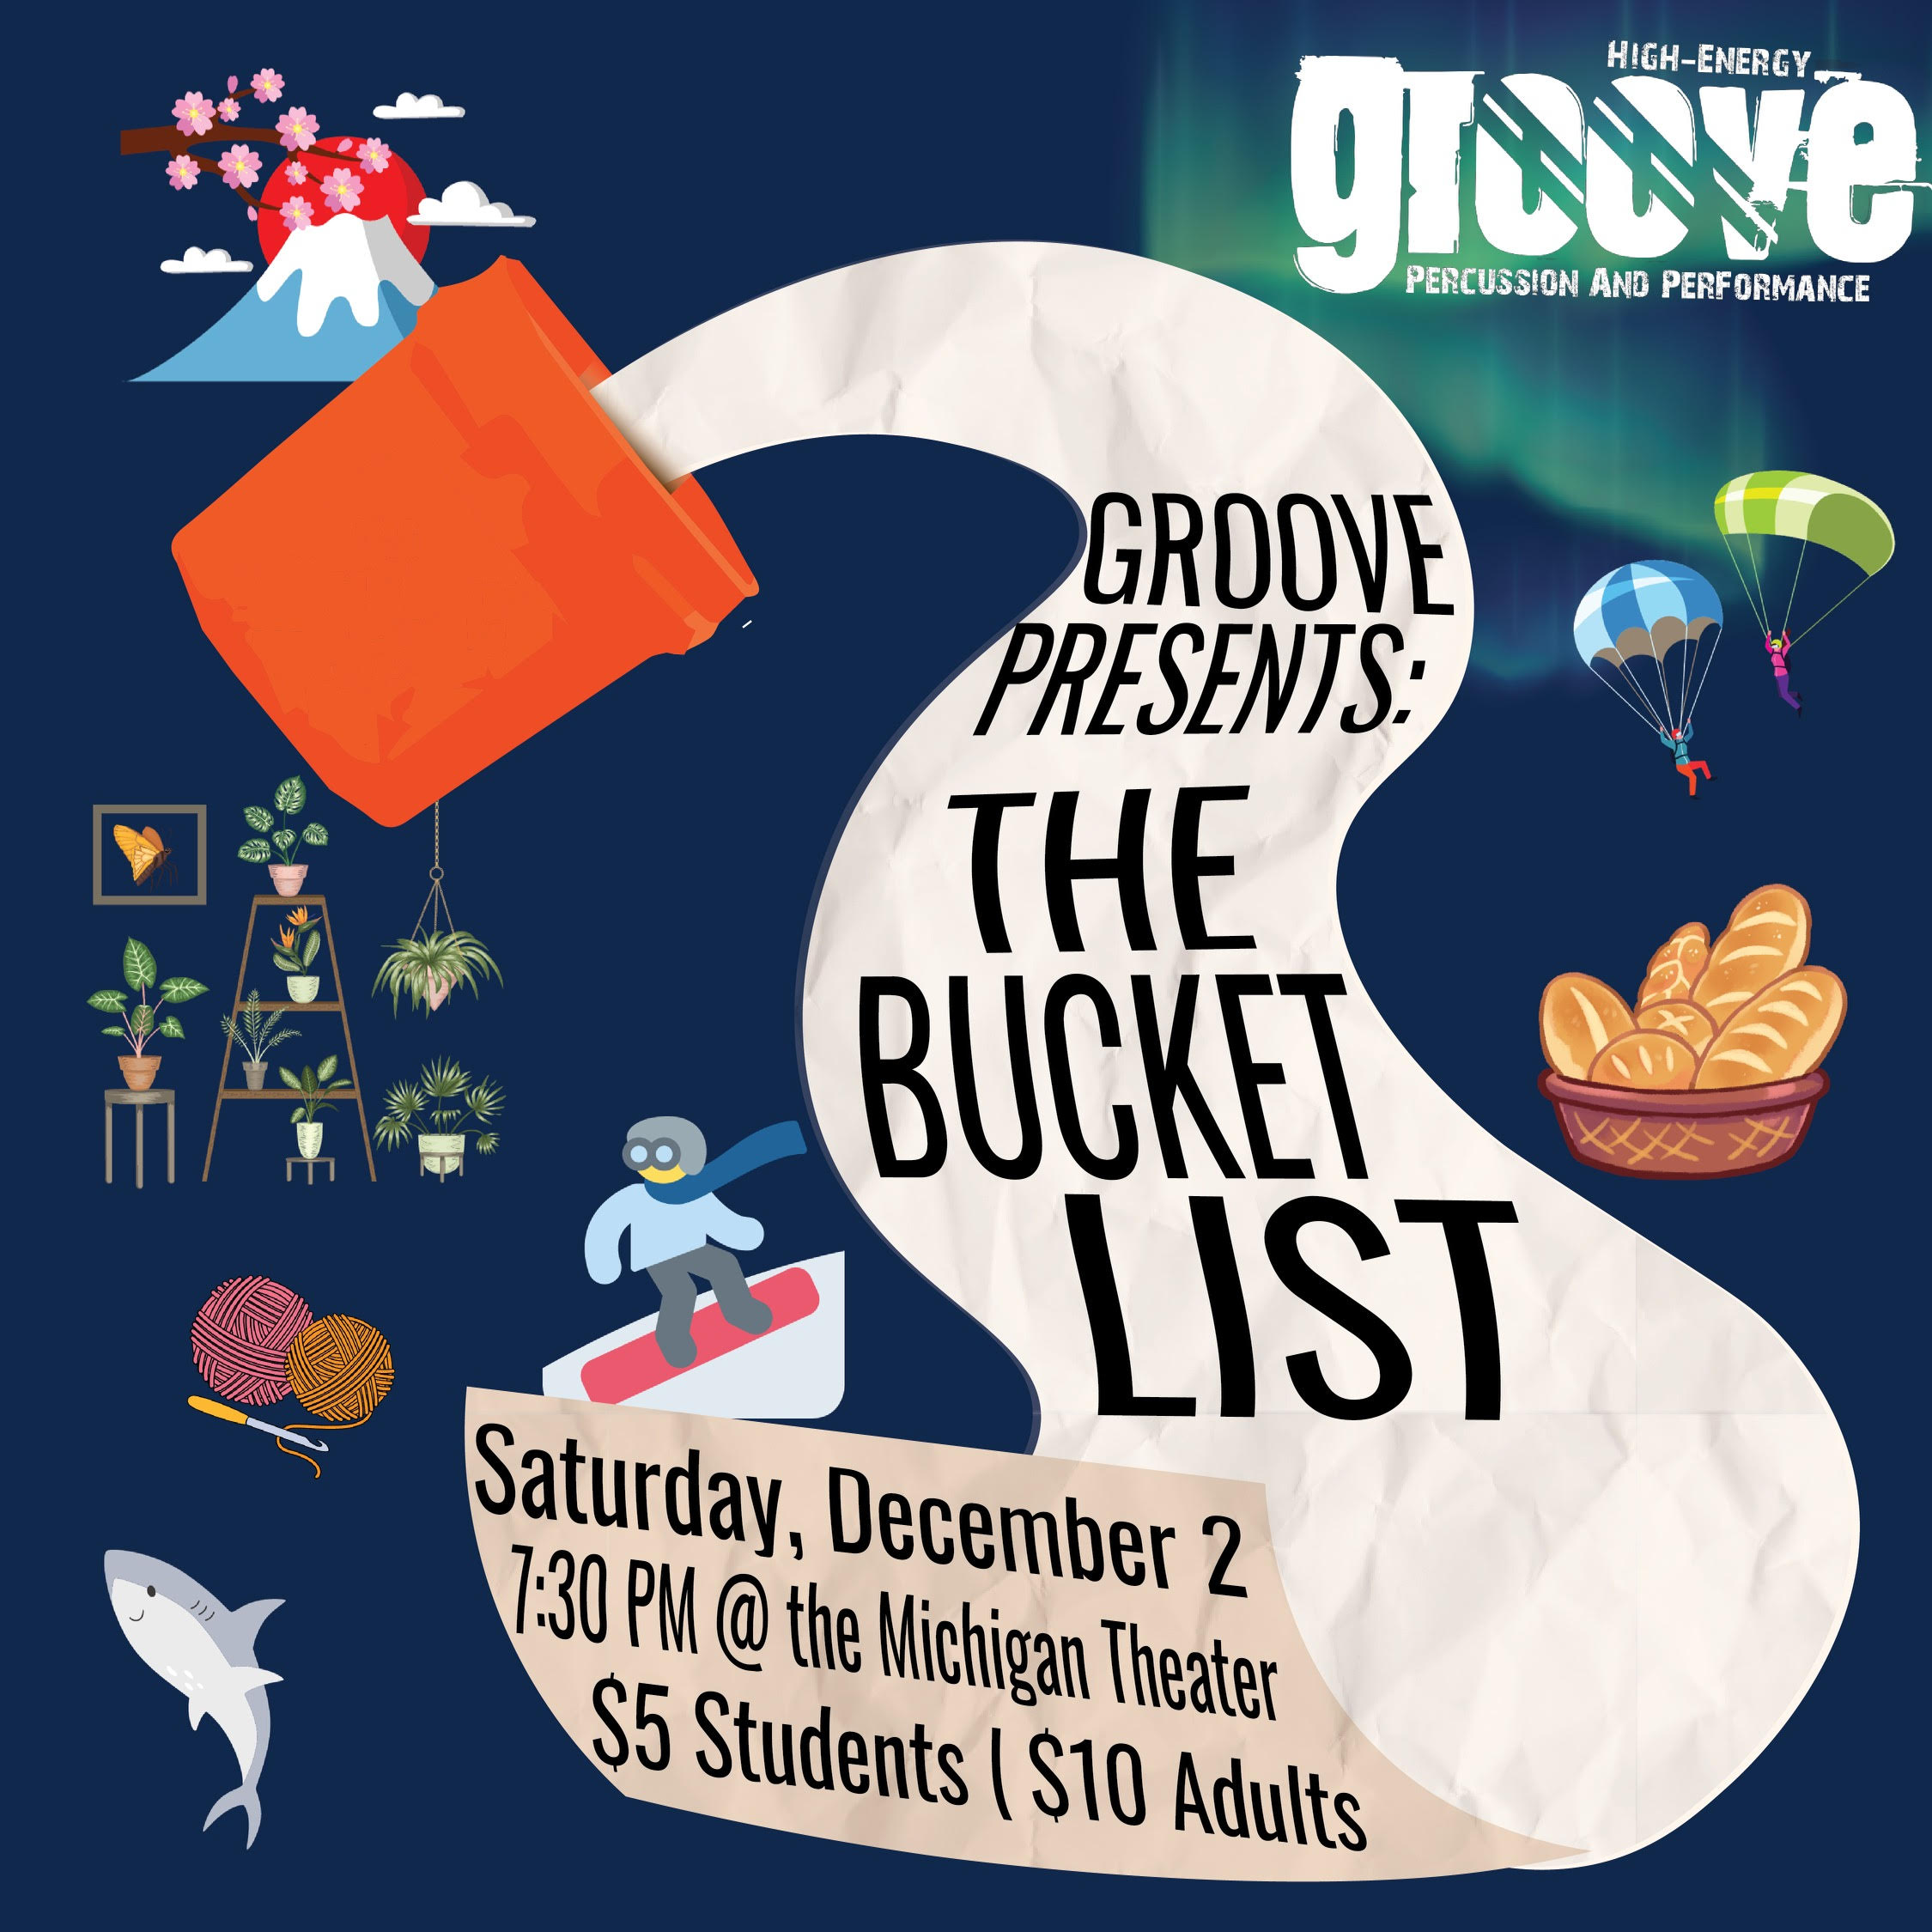 Groove Presents: The Bucket List  University of Michigan Union Ticket  Office